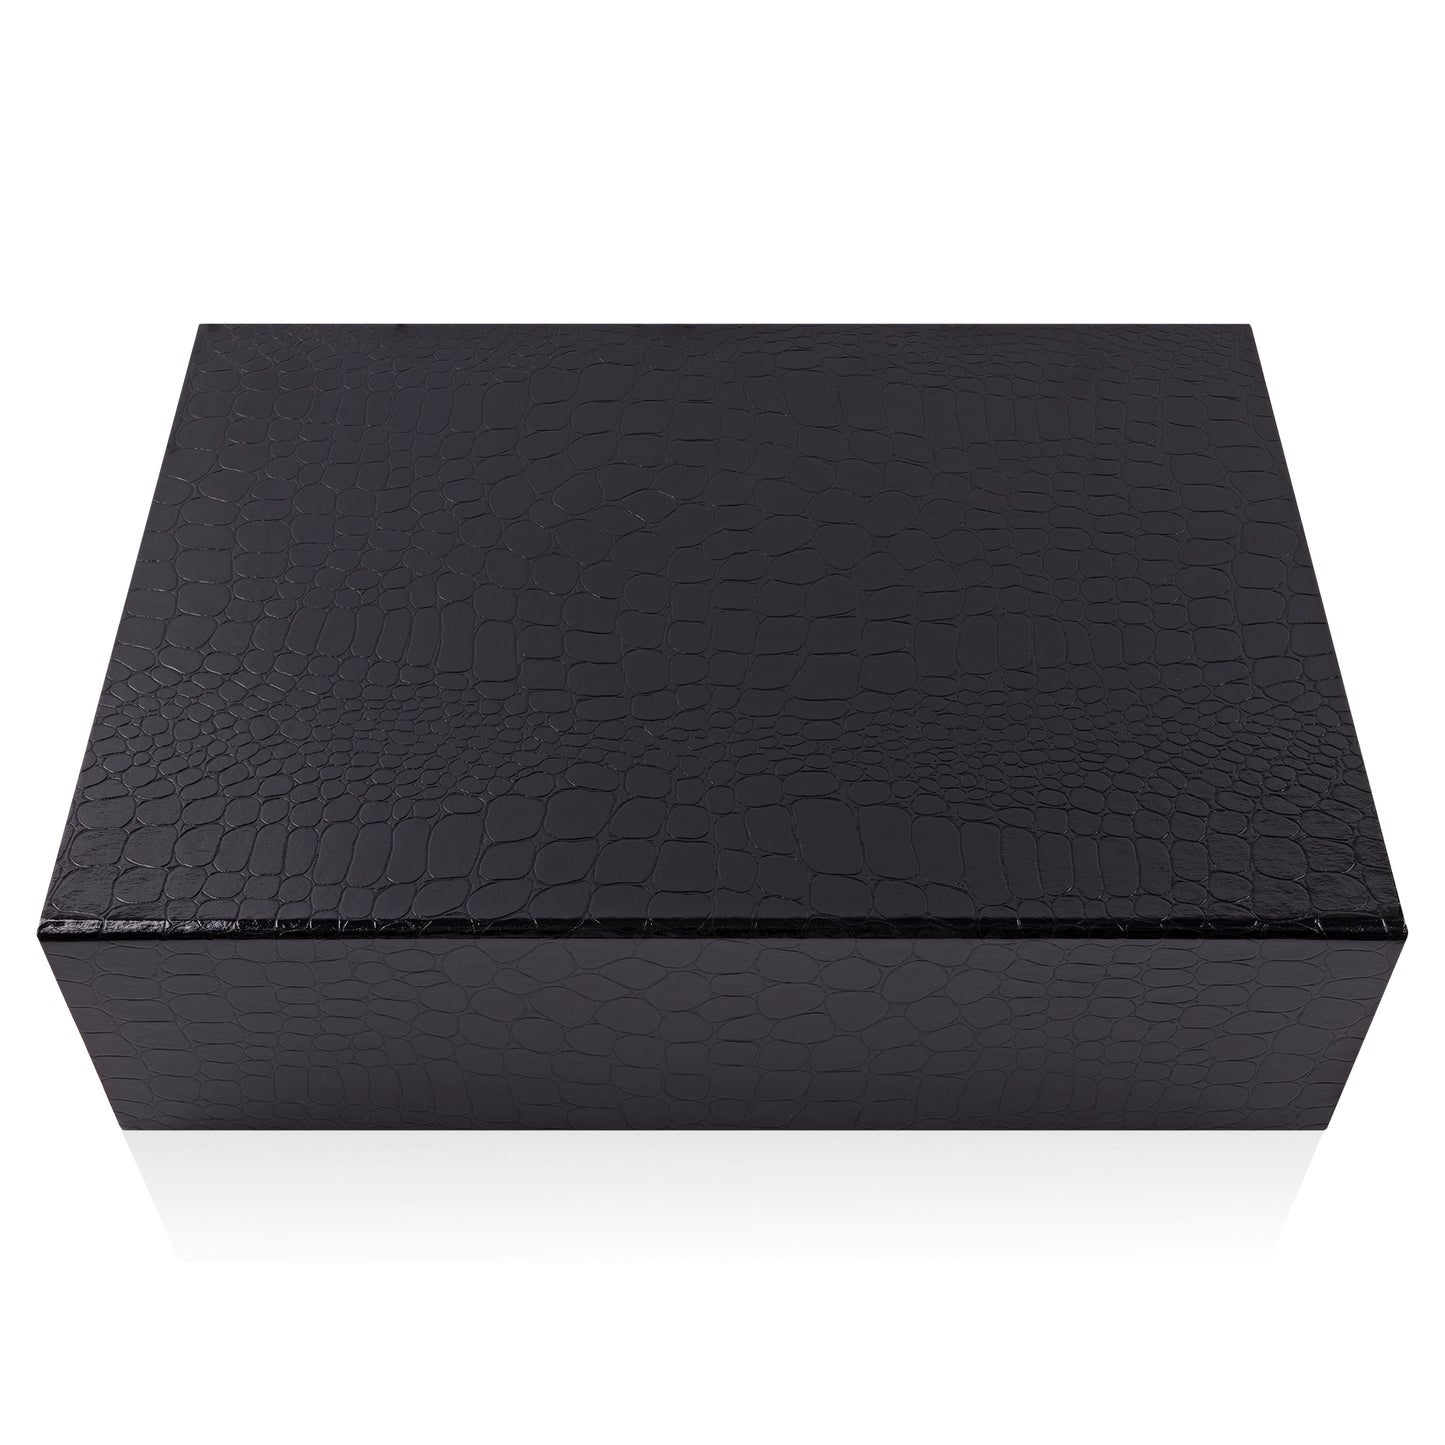 NETO Collection - Black Chest Box